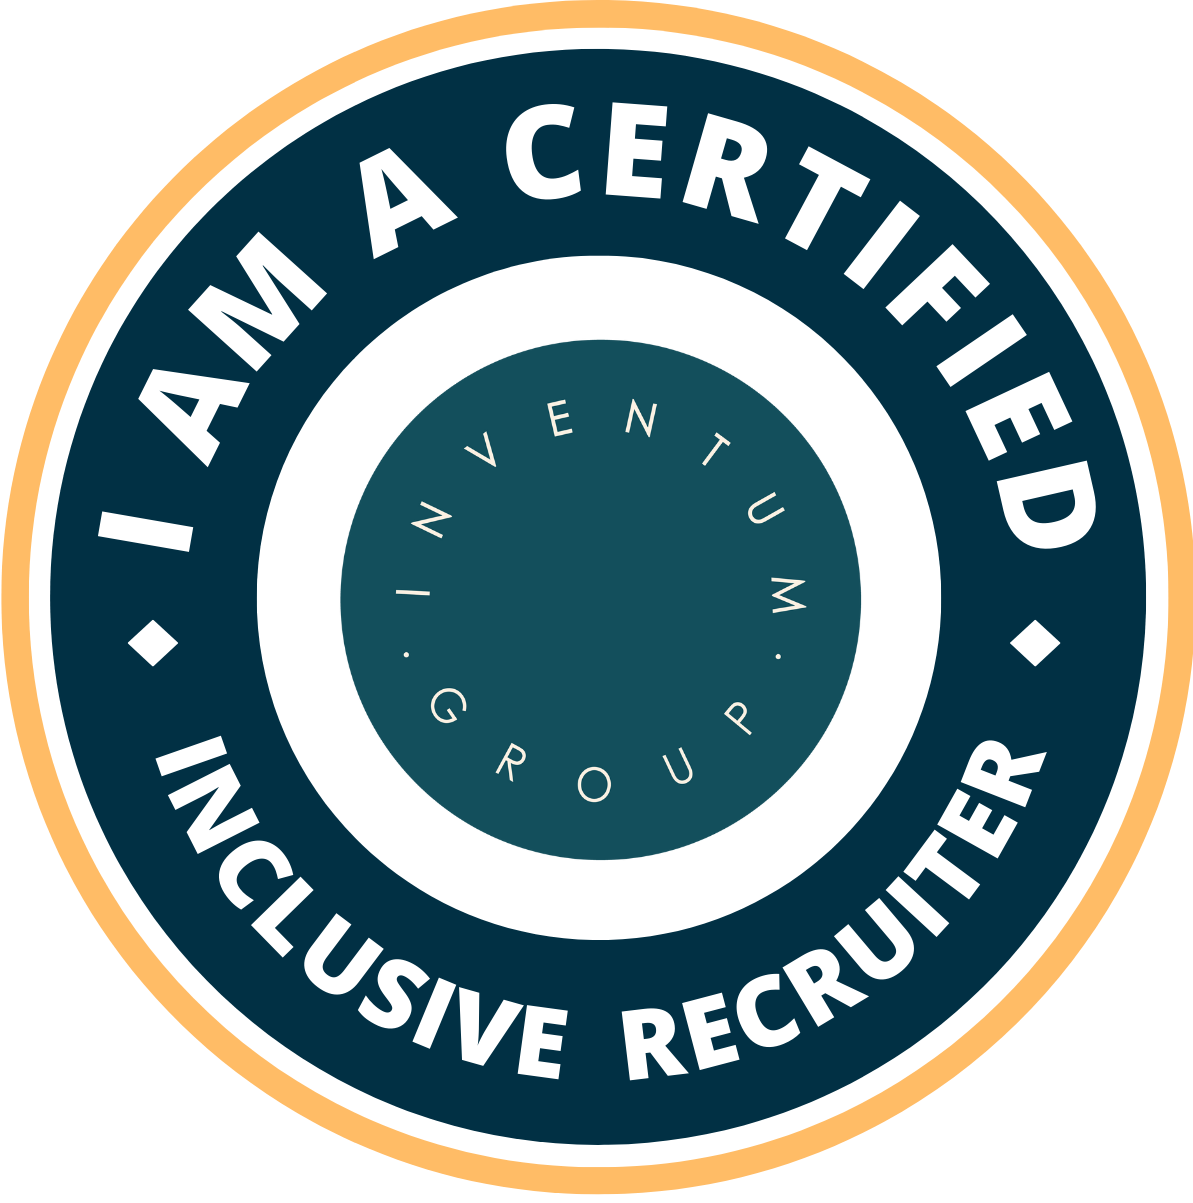 Inclusive Recruiter